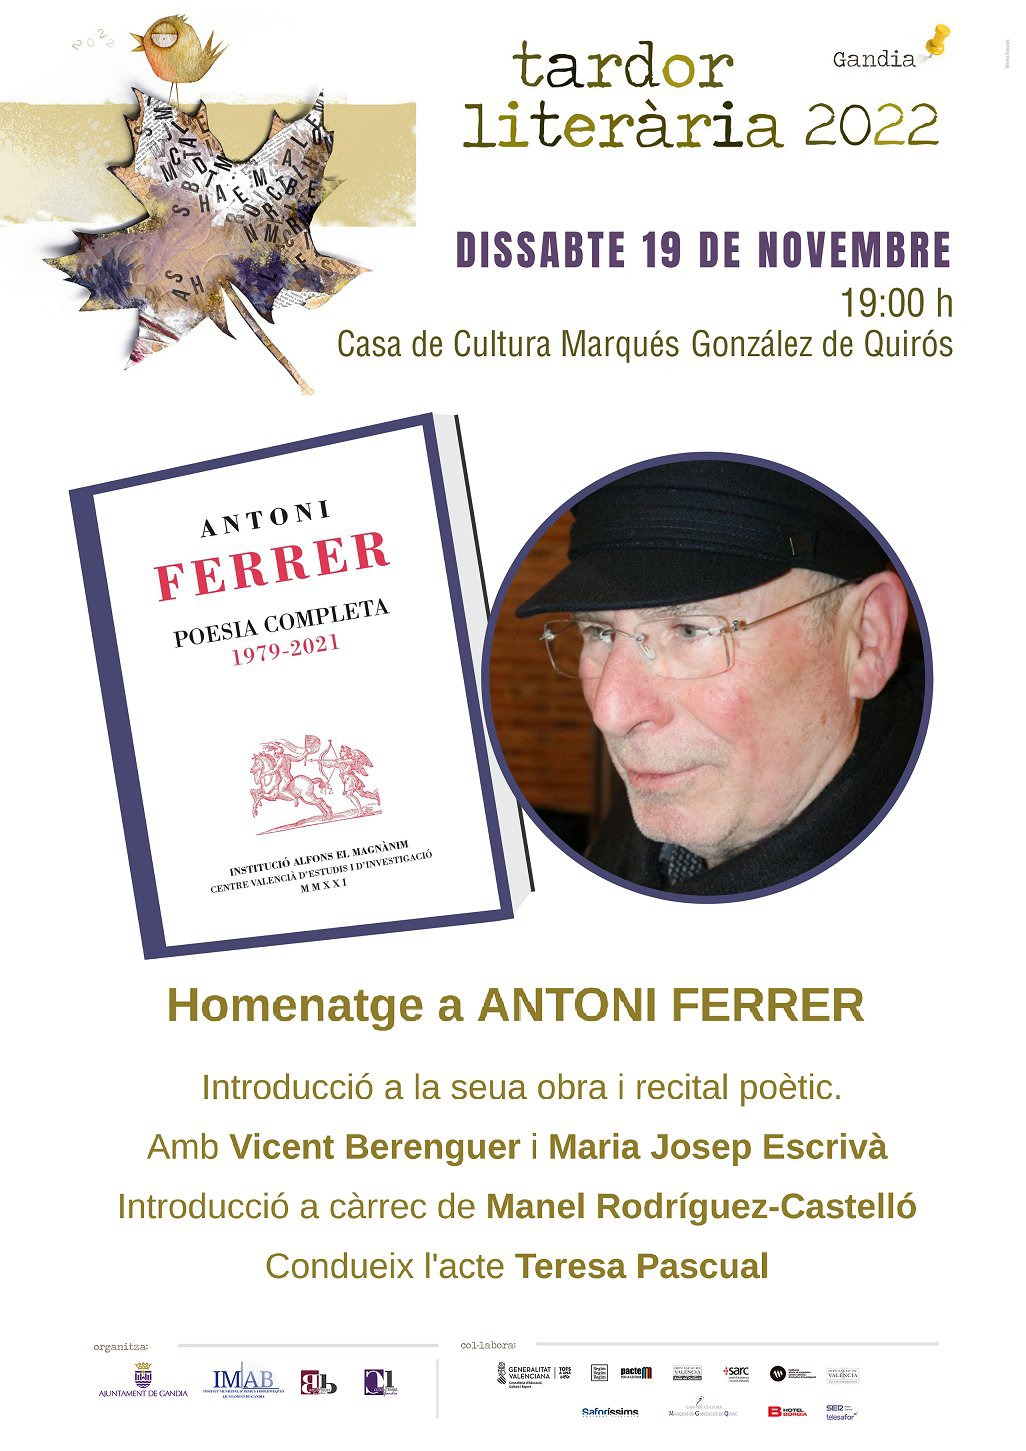 Homenatge a Antoni Ferrer